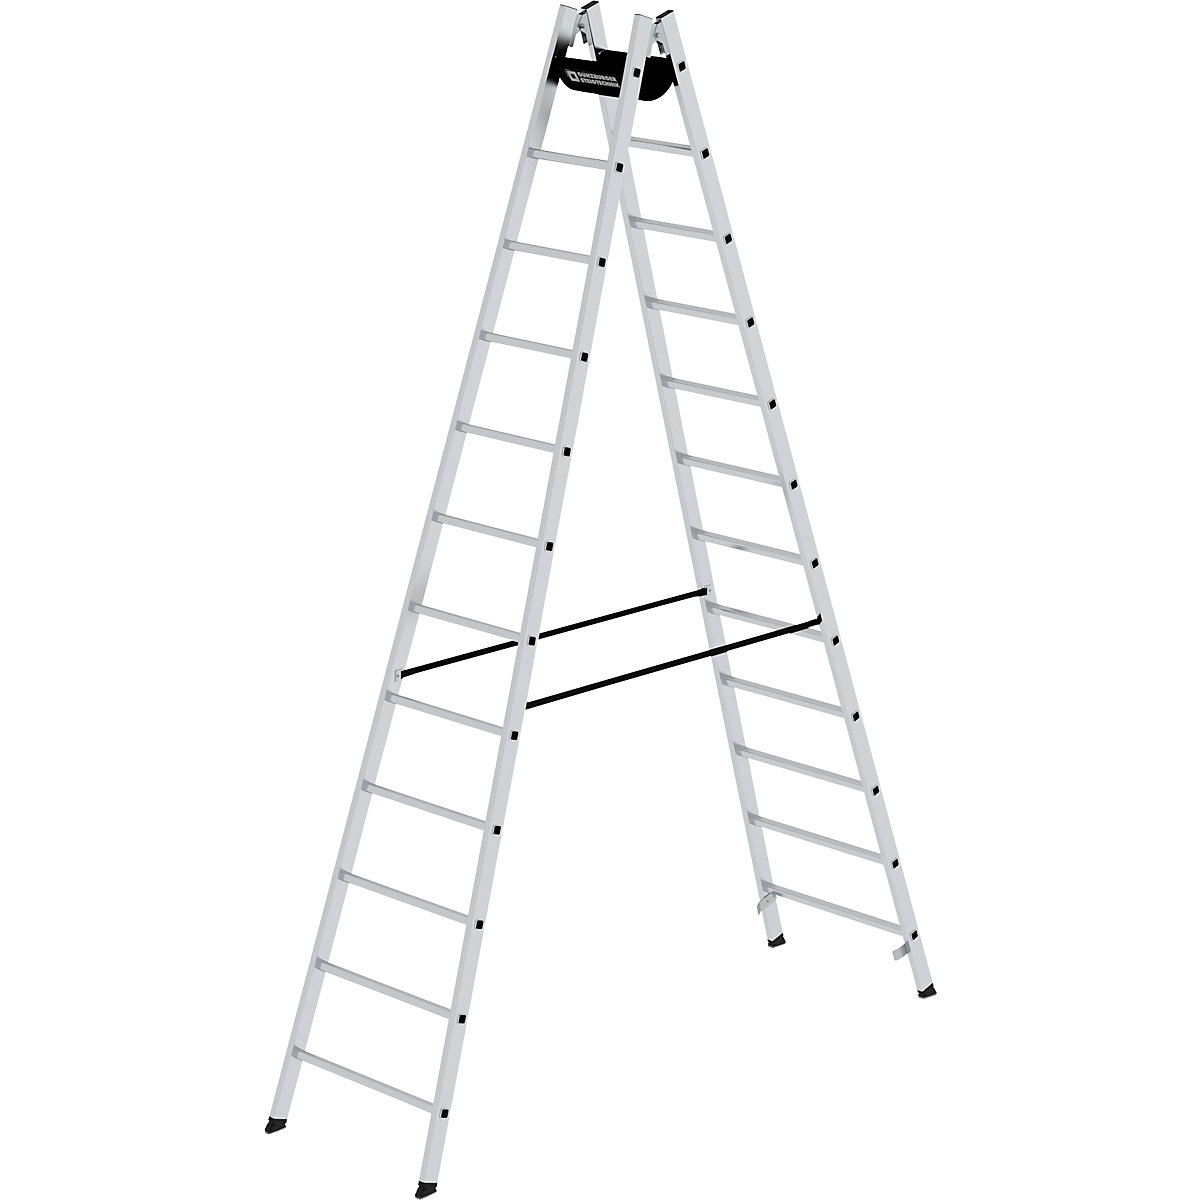 Safety rung ladder, double sided access – MUNK, rungs 30 x 30 mm, non-slip, 2x12 rungs-11